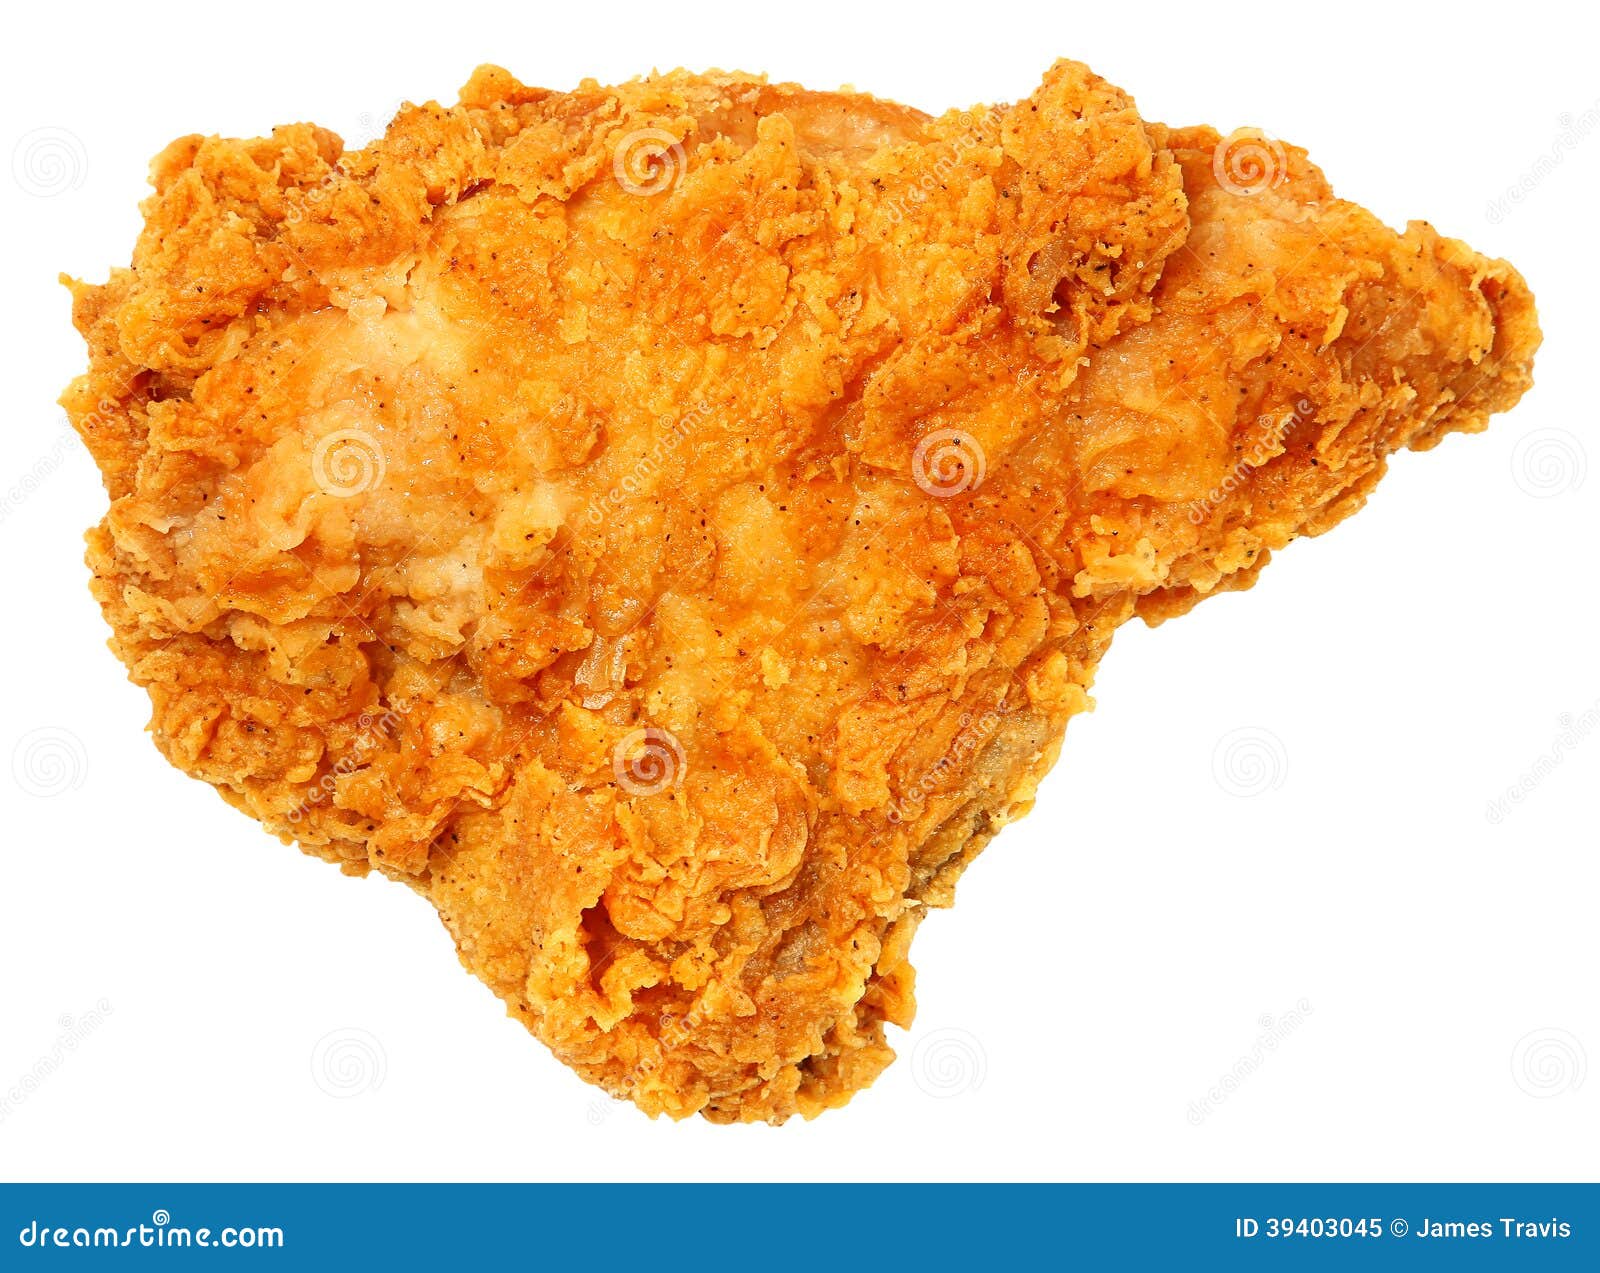 crispy-fried-chicken-breast-isolated-over-white-39403045.jpg